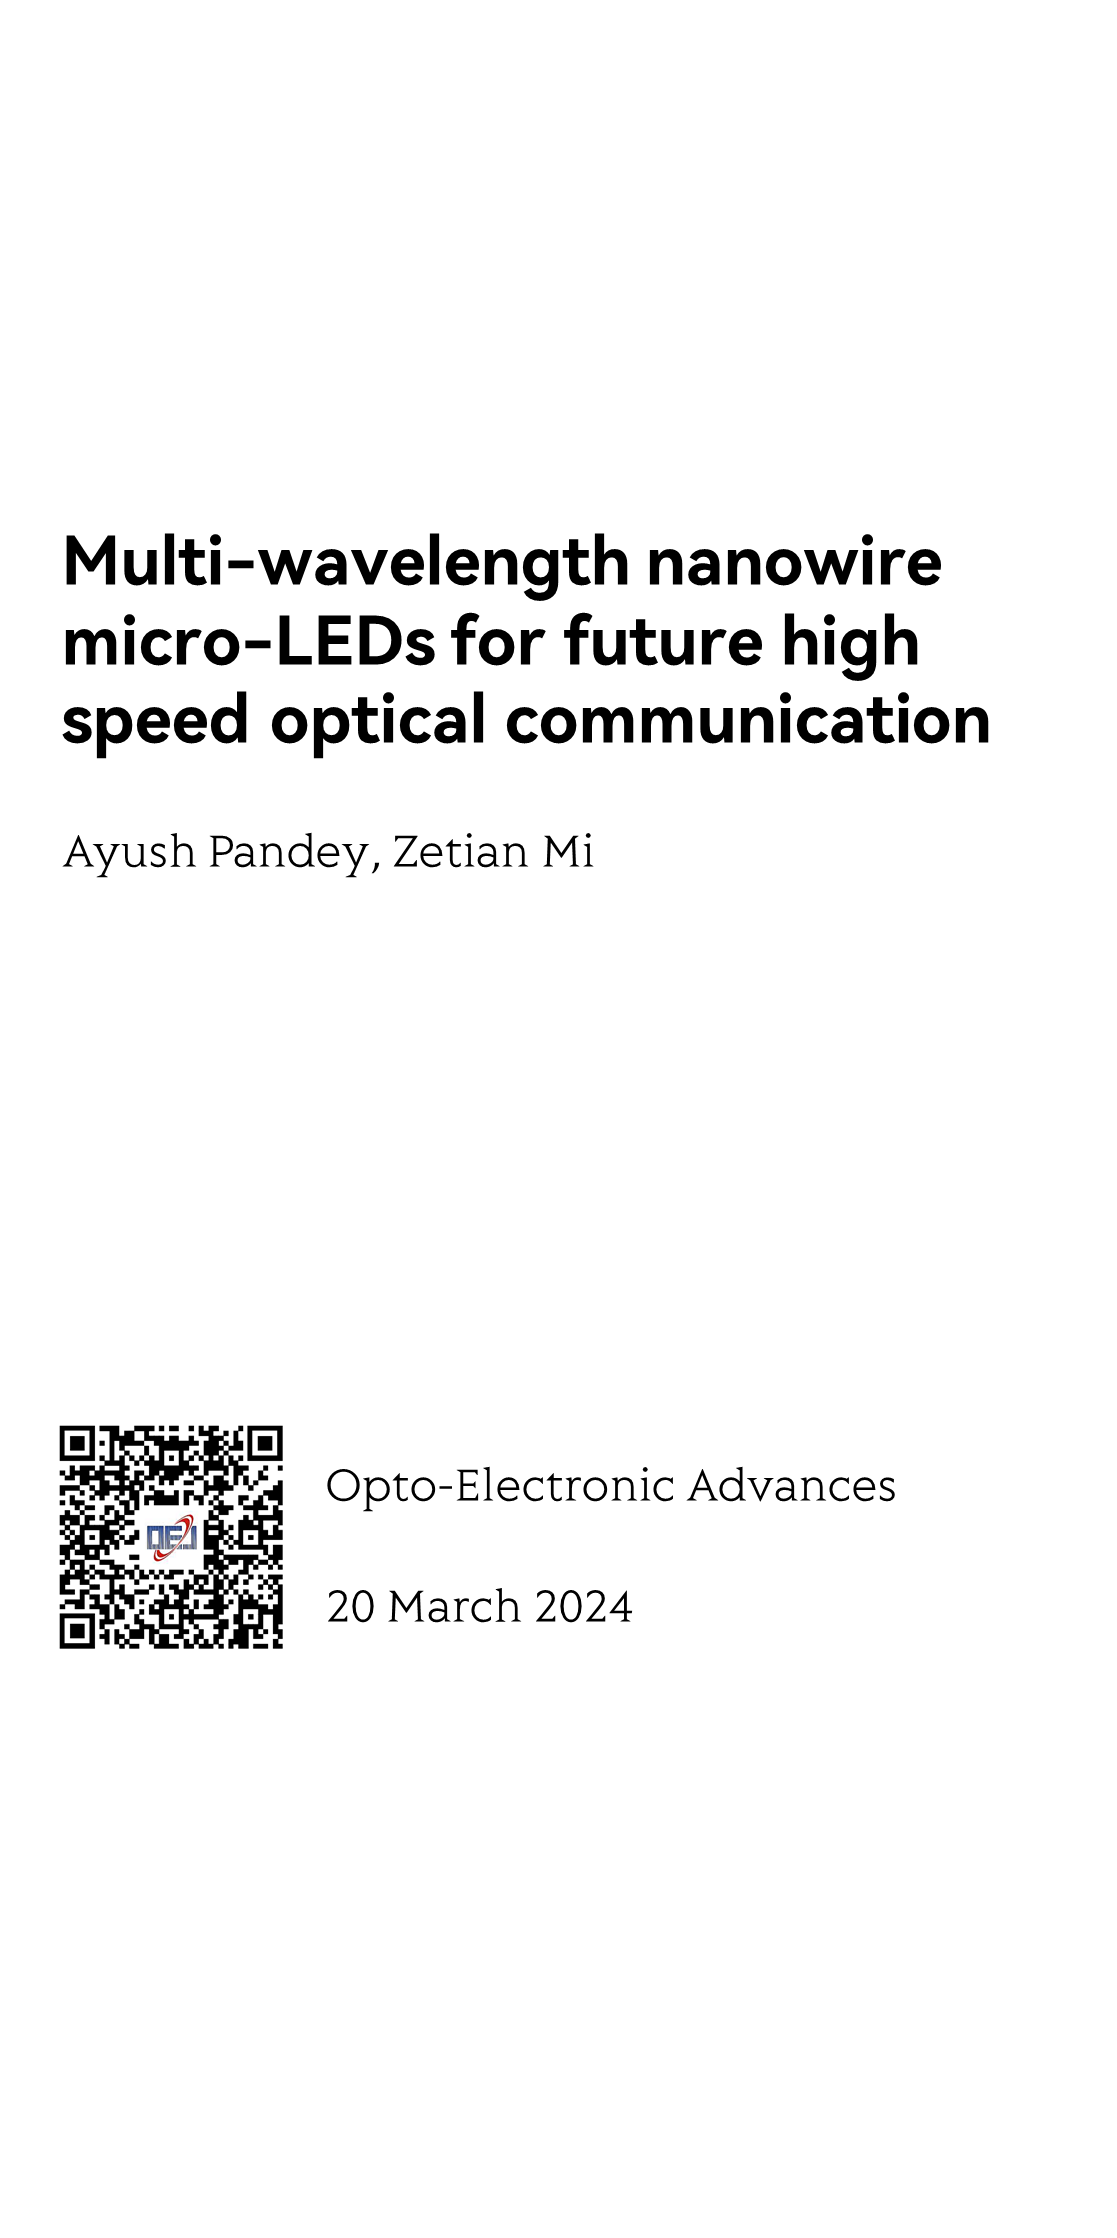 Multi-wavelength nanowire micro-LEDs for future high speed optical communication_1